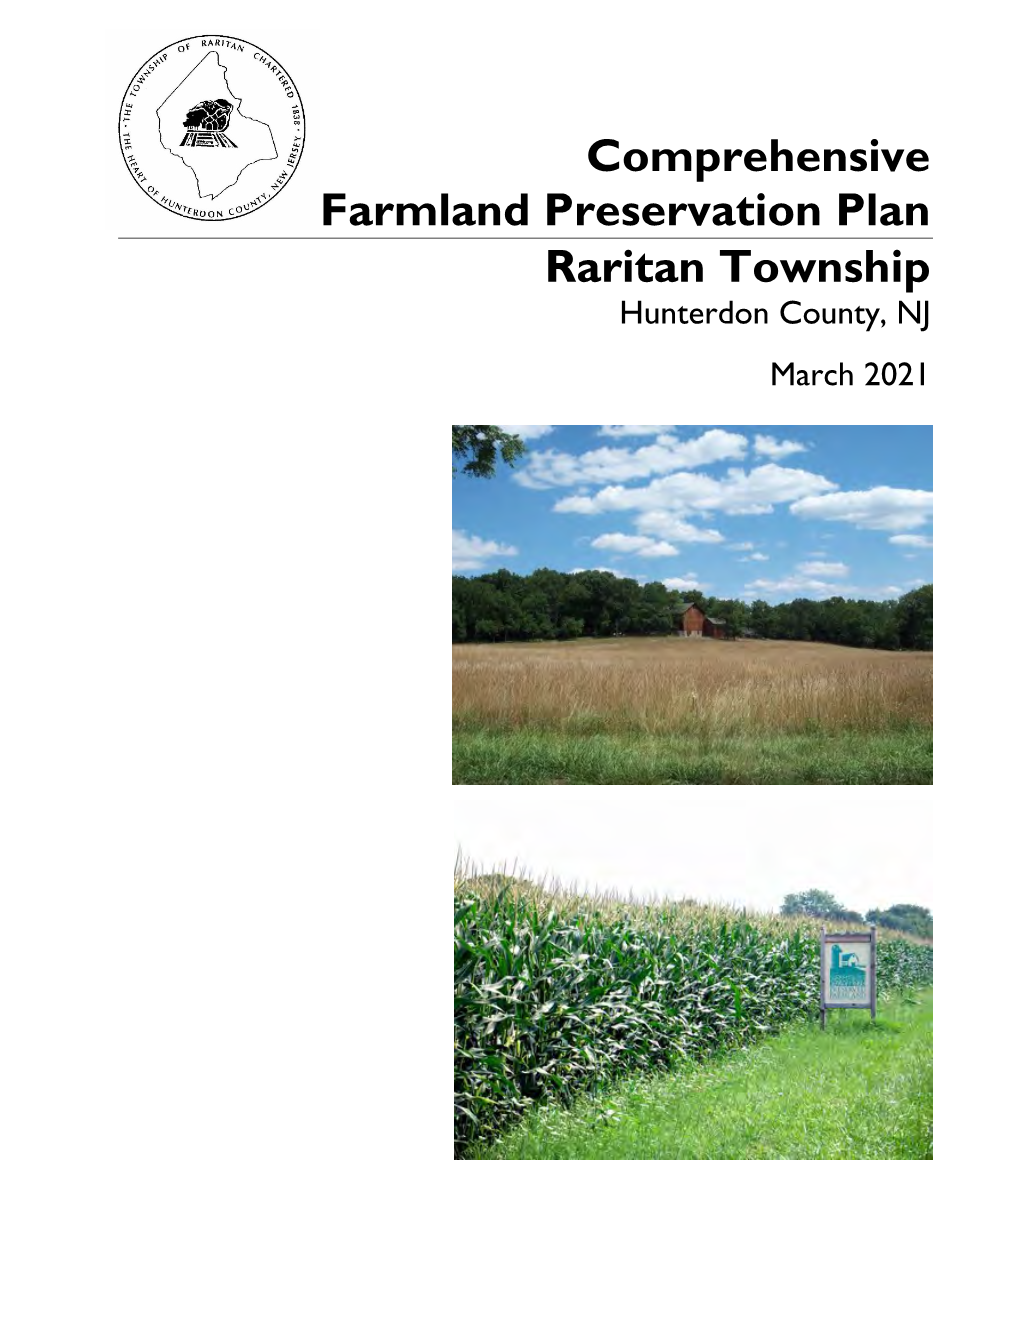 Comprehensive Farmland Preservation Plan Raritan Township Hunterdon County, NJ